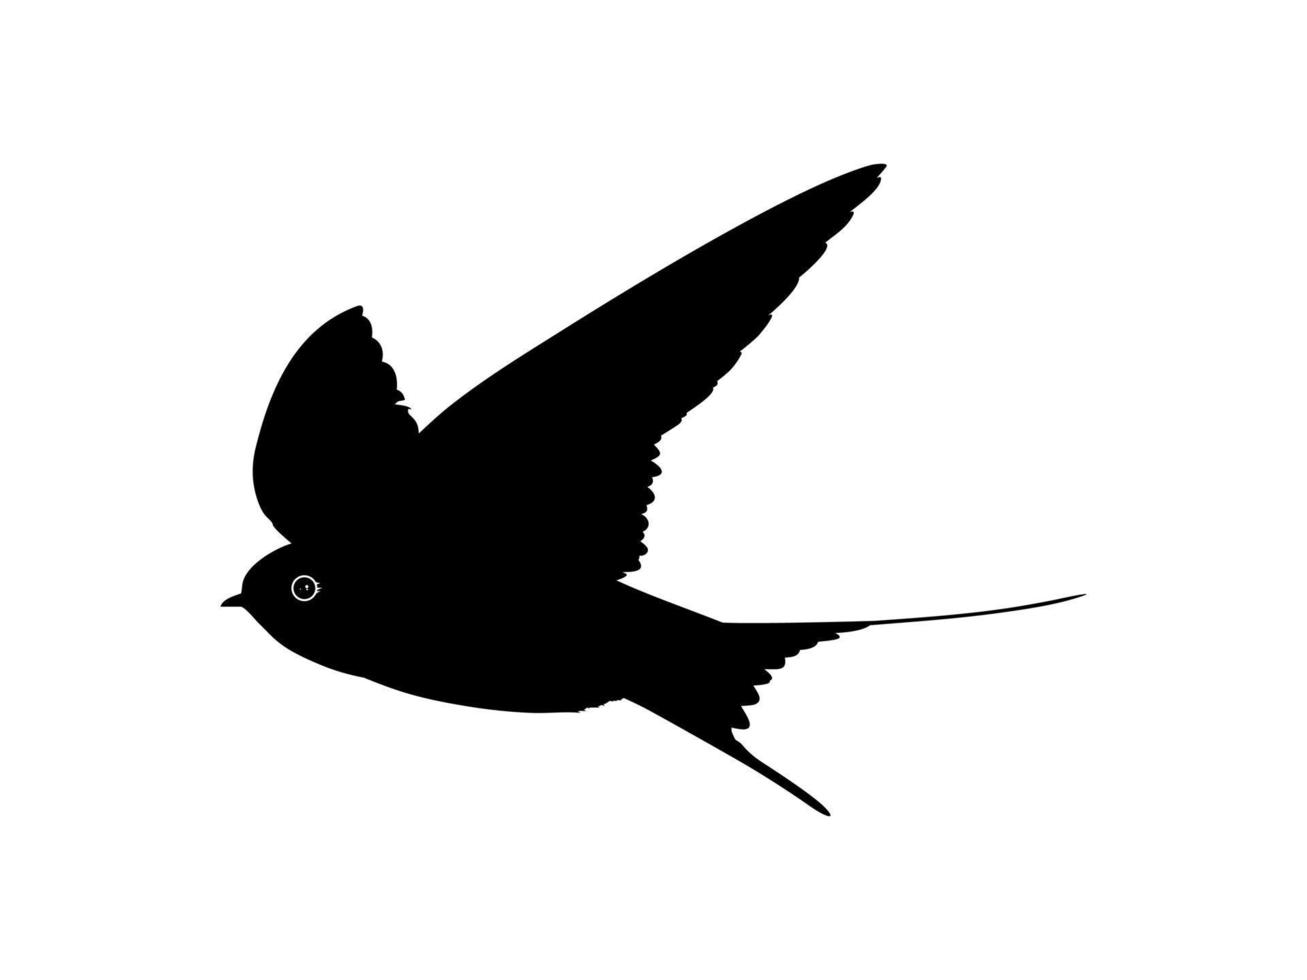 fliegende Schwalbenvogelsilhouette für Logo, Piktogramm, Website. Kunstillustration oder Grafikdesignelement. Vektor-Illustration vektor